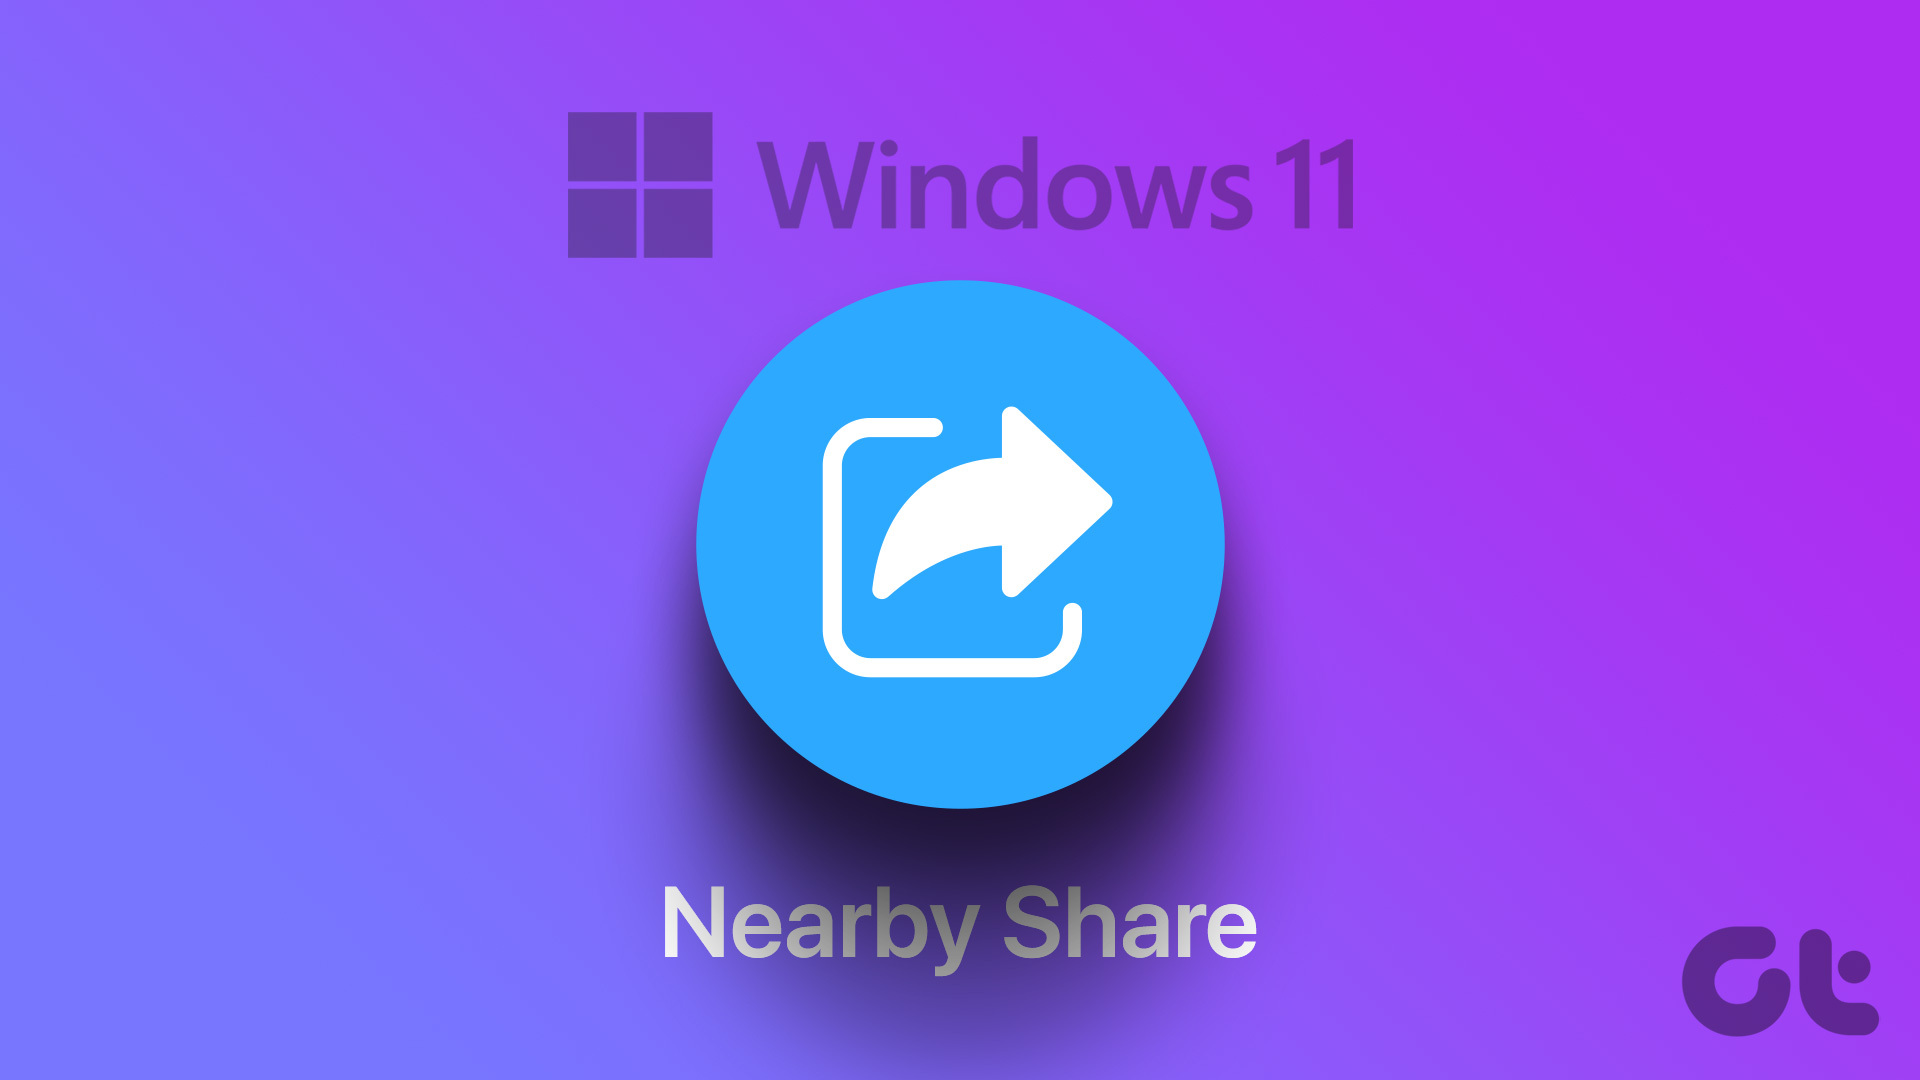 Share files on Windows 11